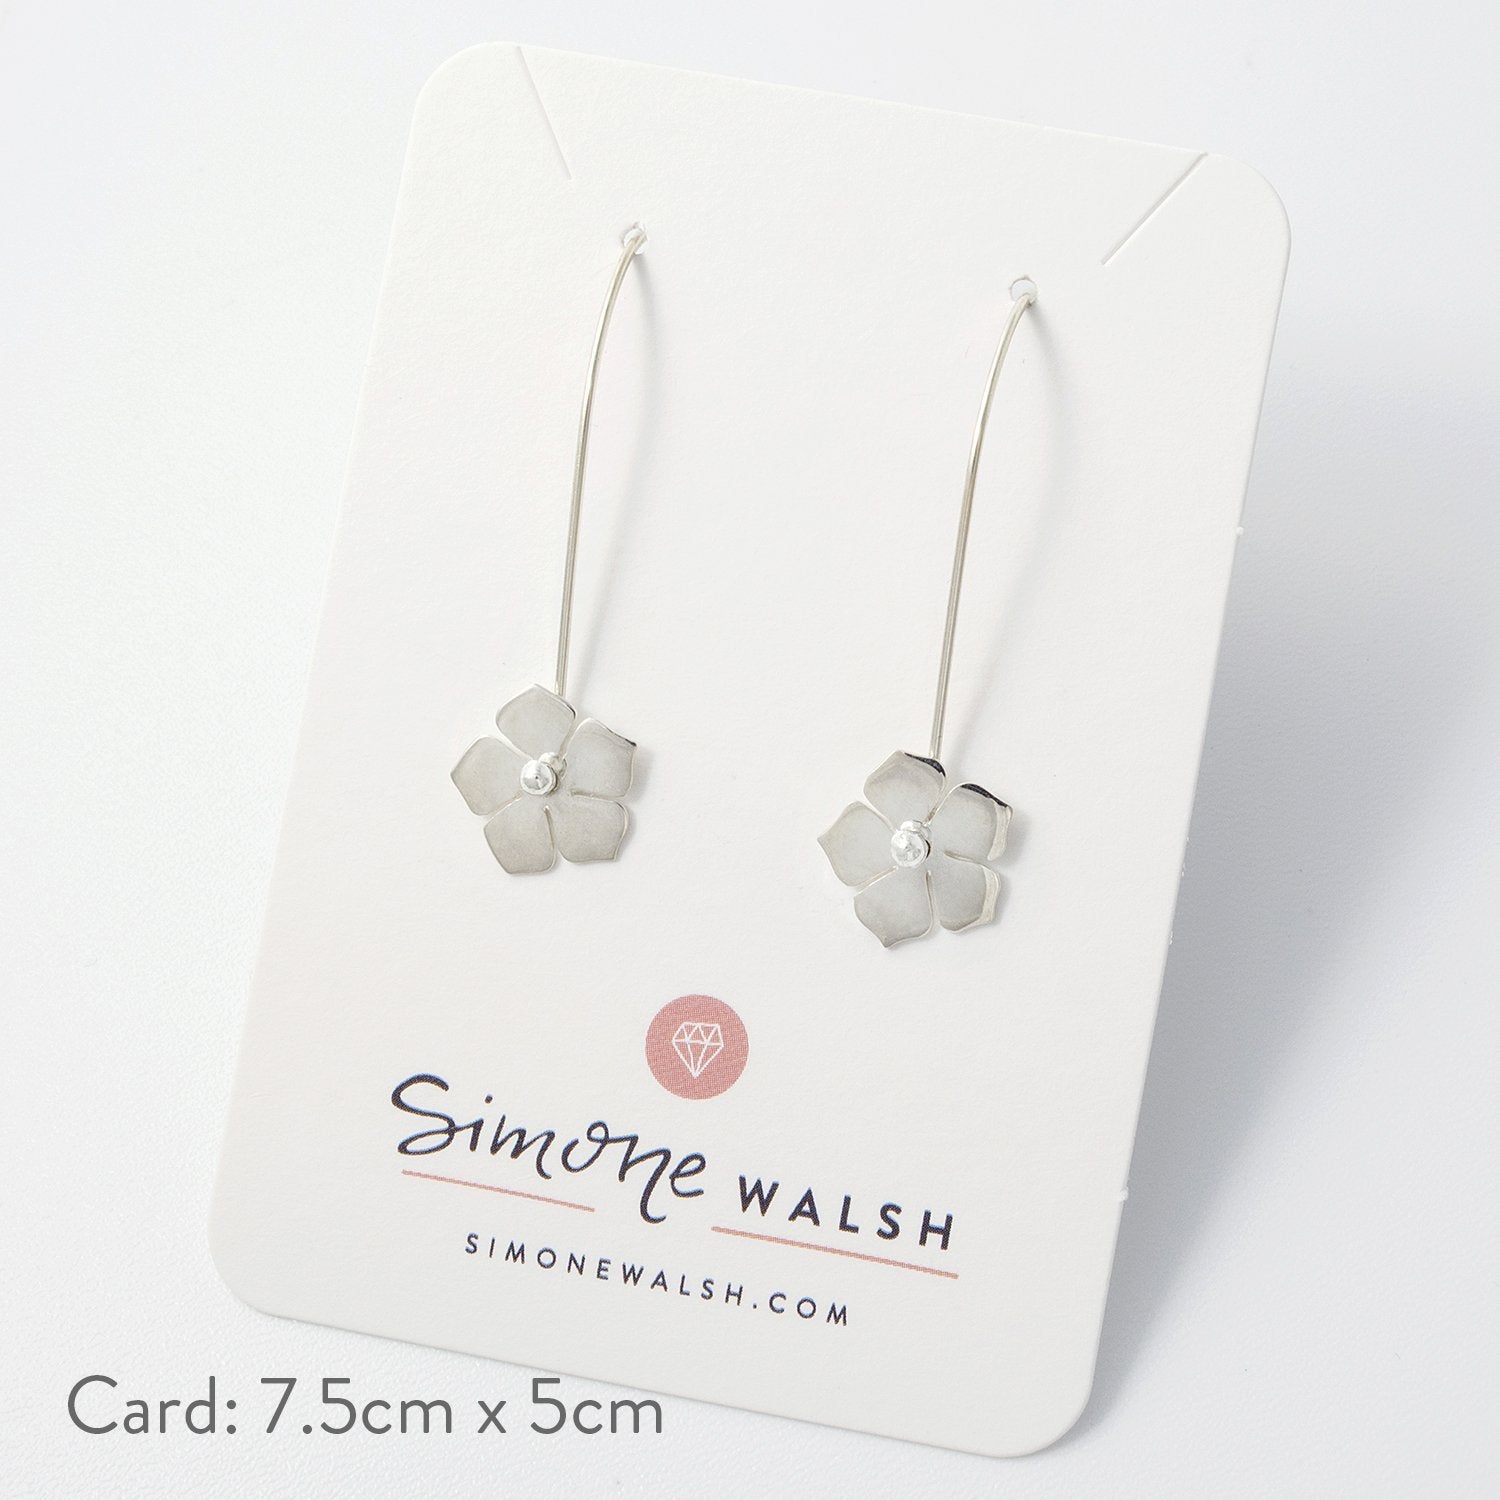 Forget-me-not earrings - Simone Walsh Jewellery Australia